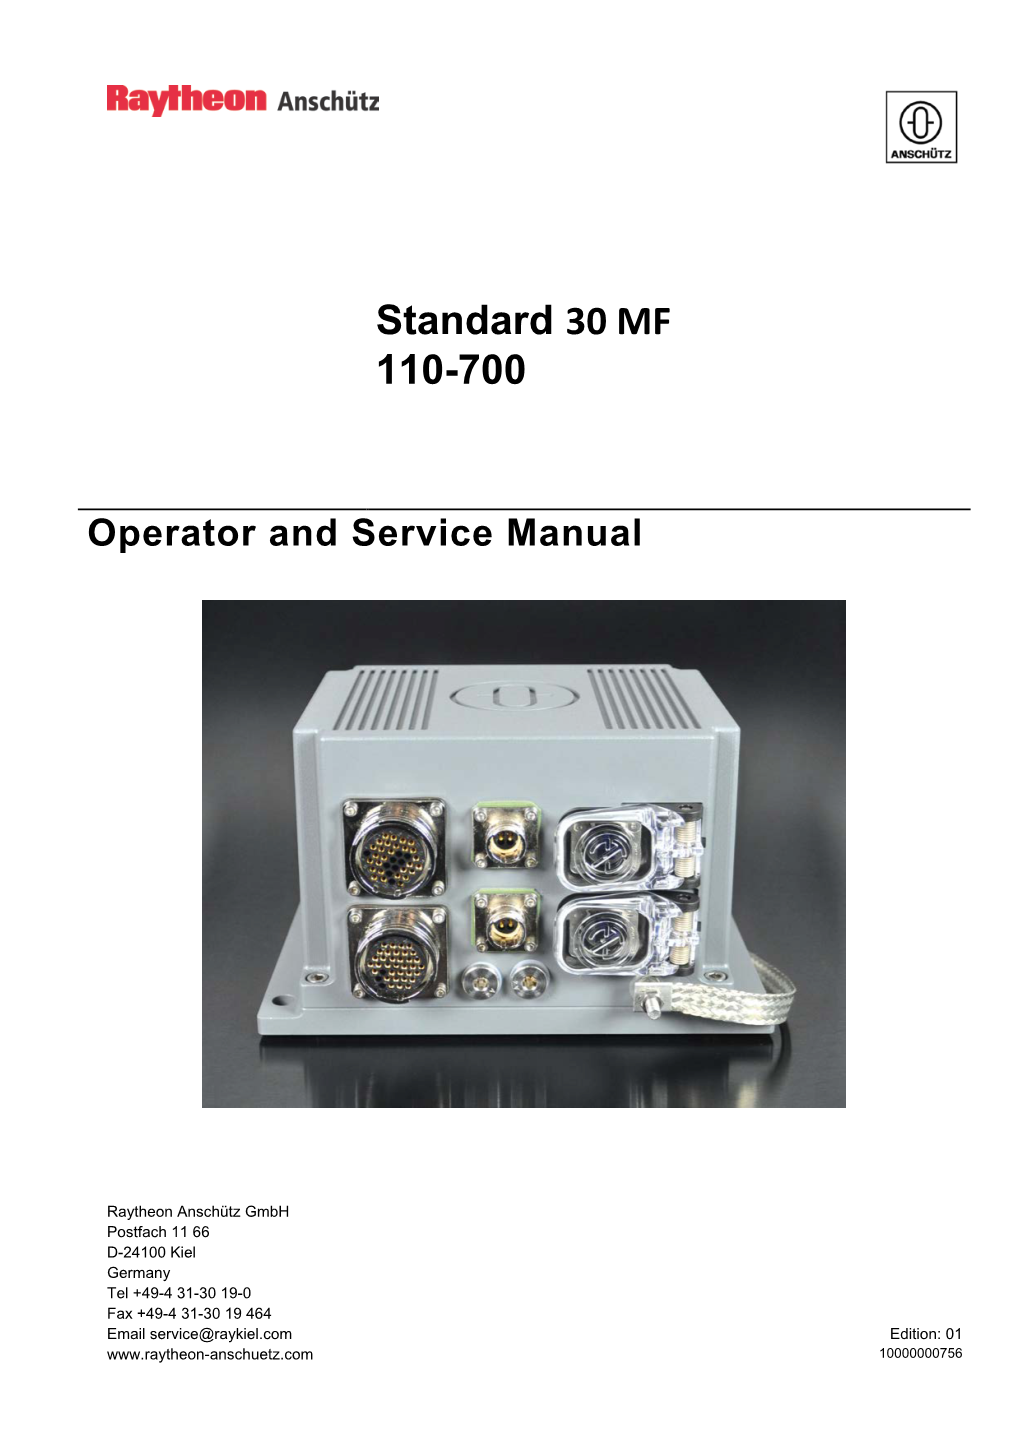 Operator and Service Manual Standard 30 MF